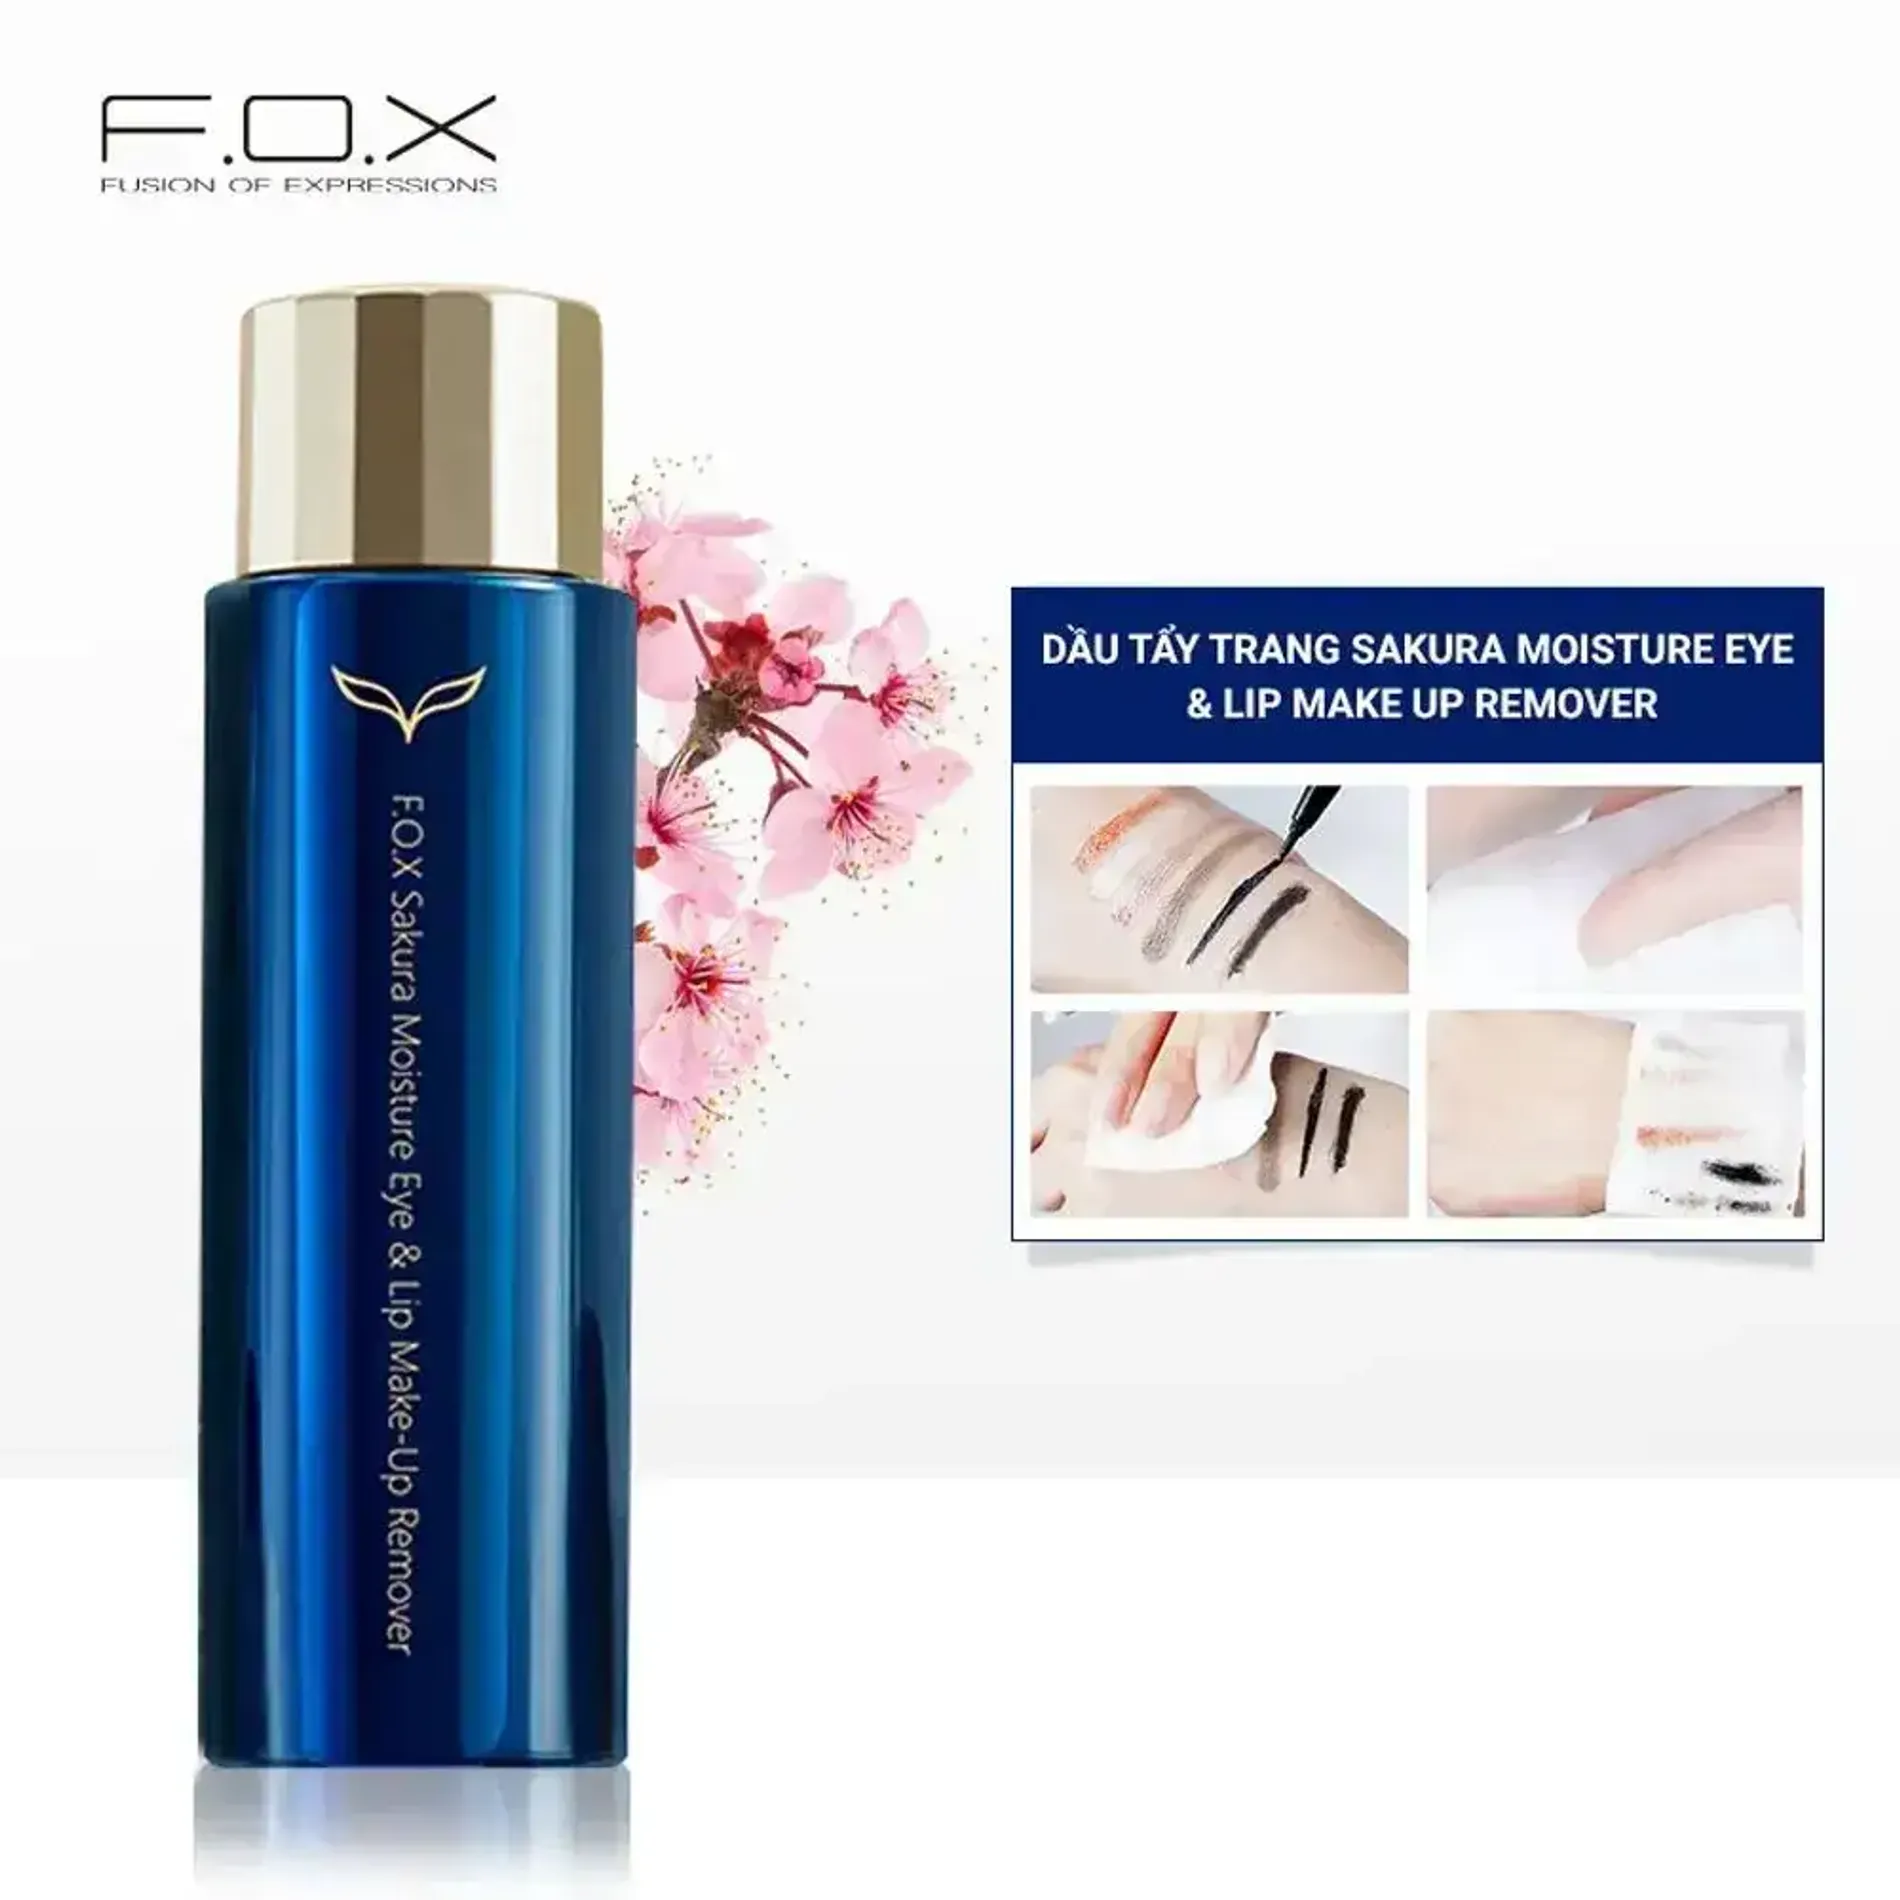 dau-tay-trang-mat-moi-f-o-x-sakura-moisture-eye-lip-make-up-remover-100ml-2